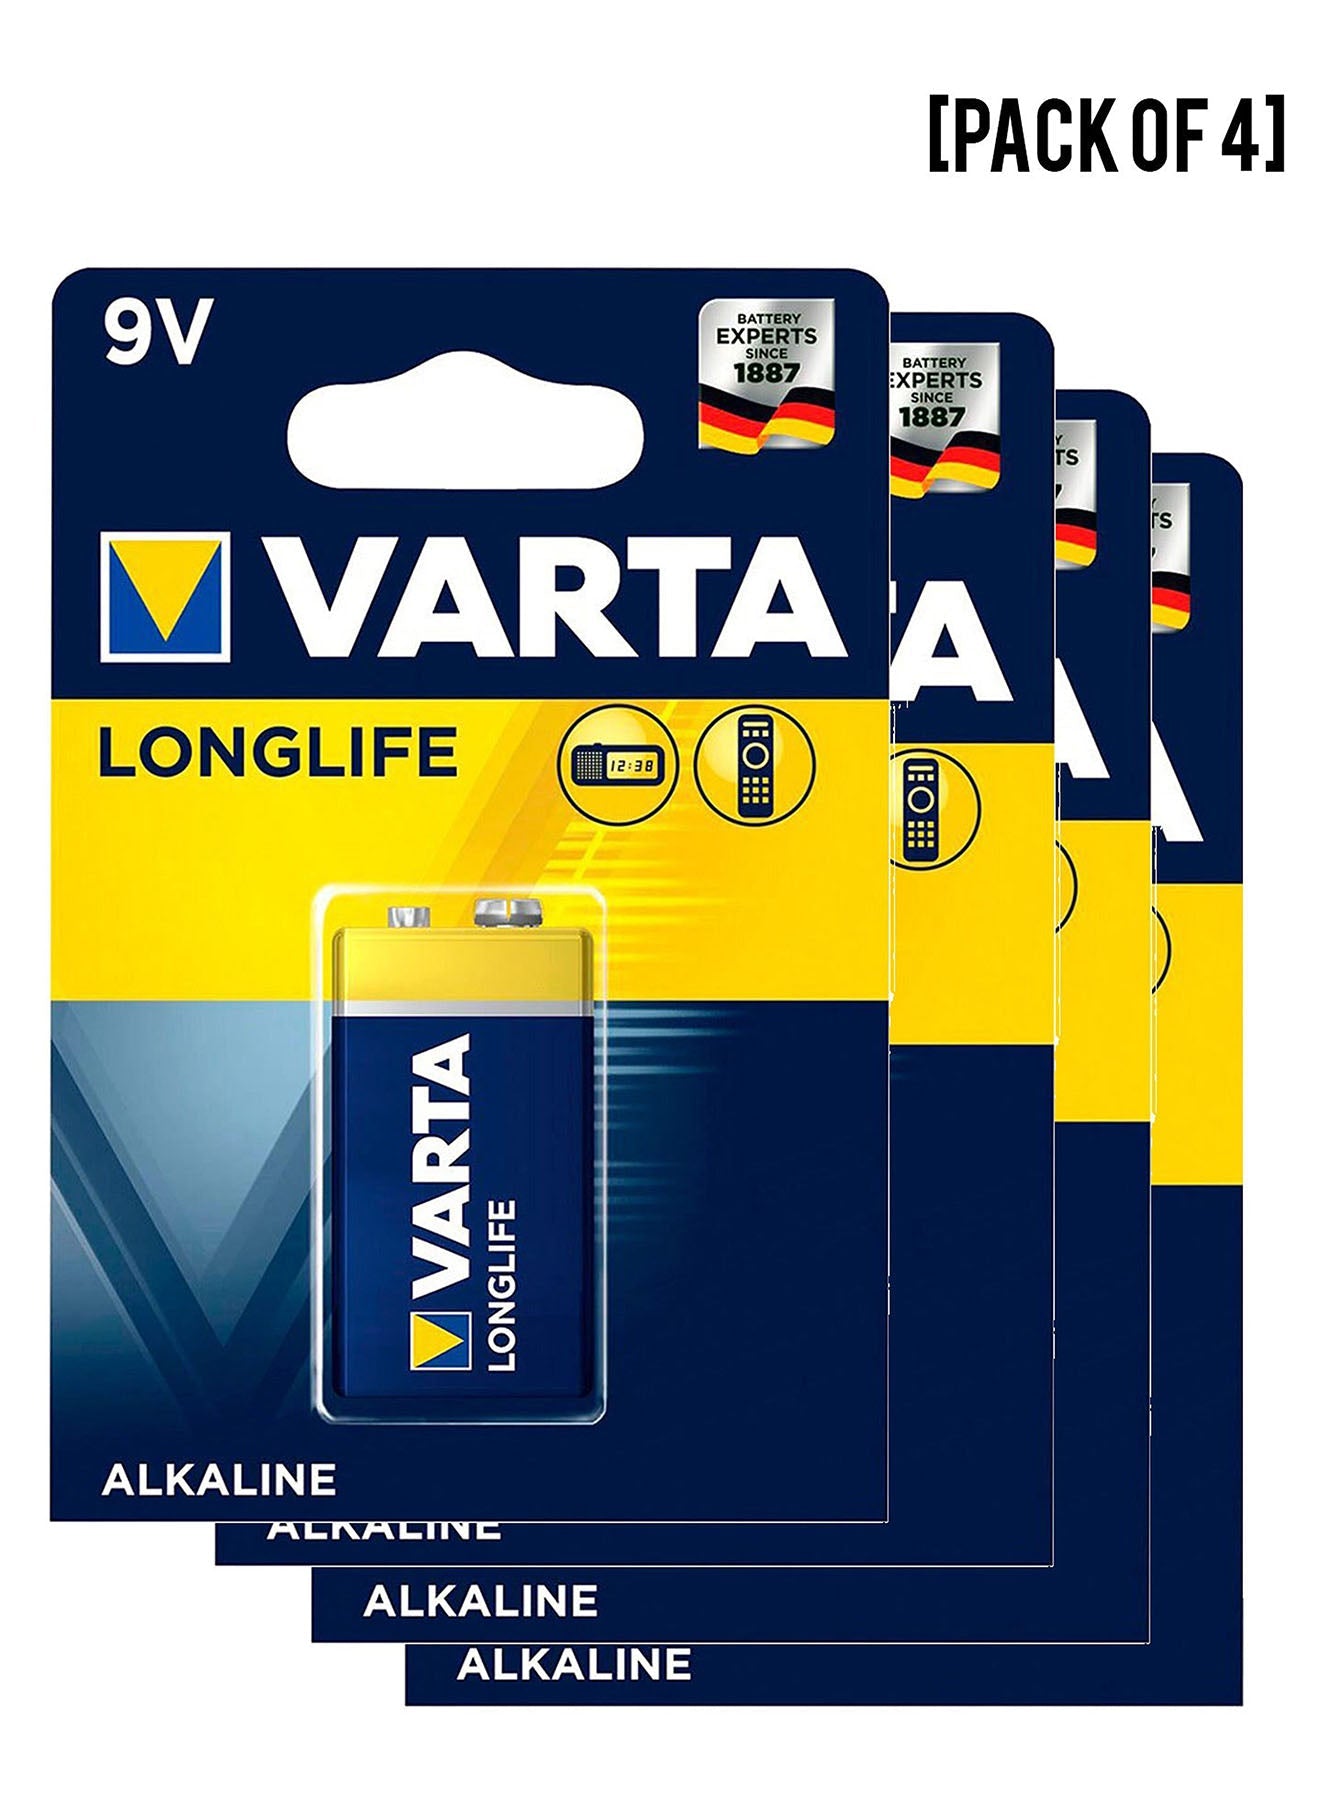 Varta Long Life 9VBlock Batteries Value Pack of 4 